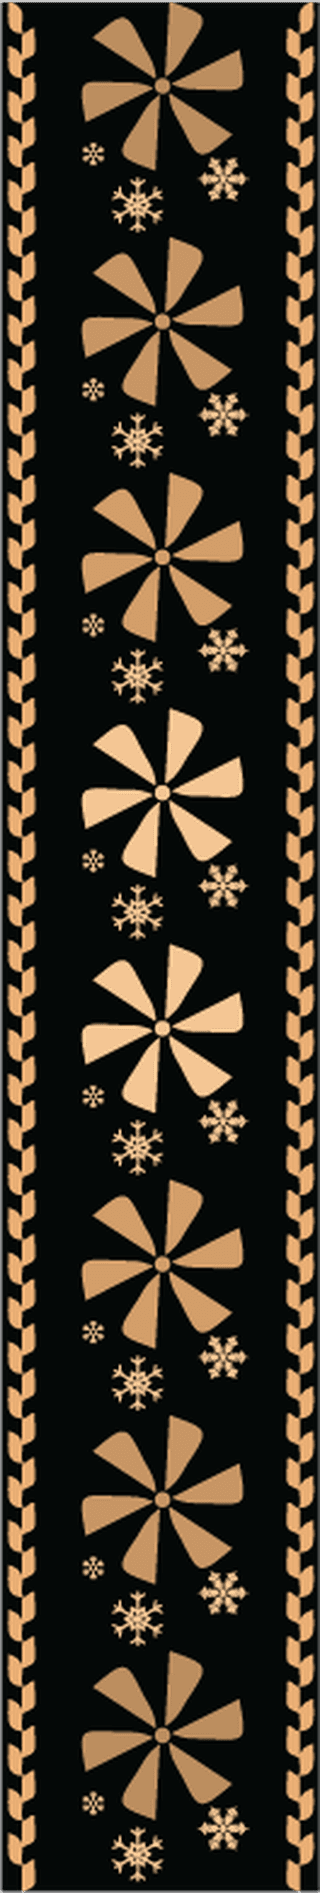 decorativepattern-templates-collection-elegant-retro-repeating-symmetric-567022